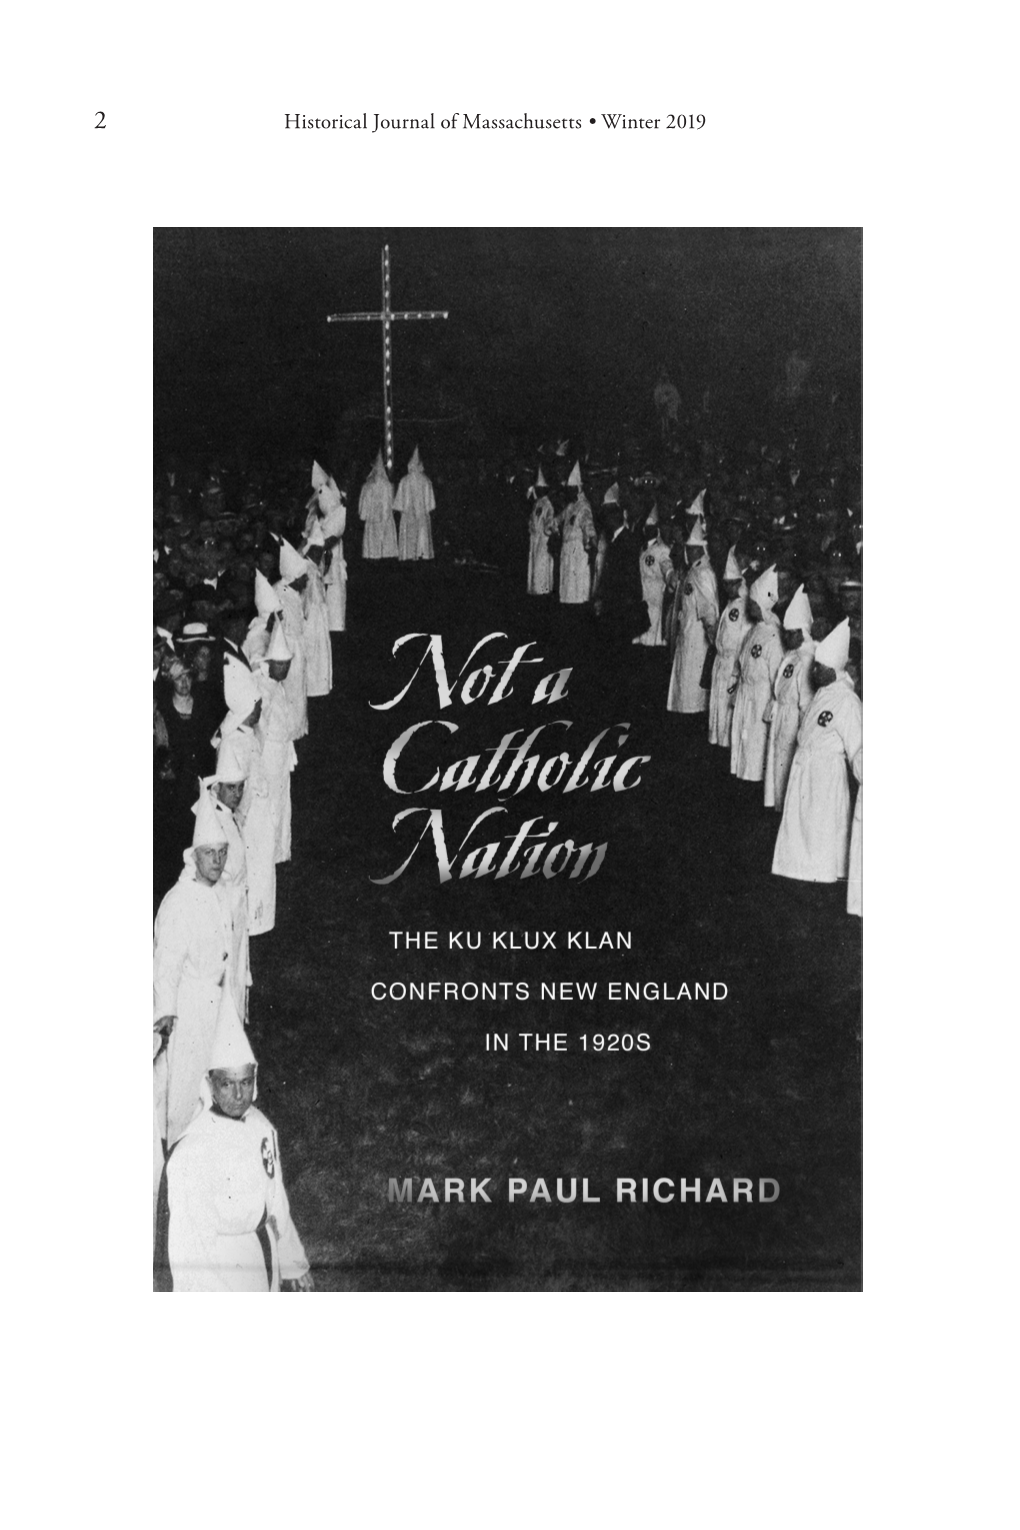 The Ku Klux Klan in 1920S Massachusetts